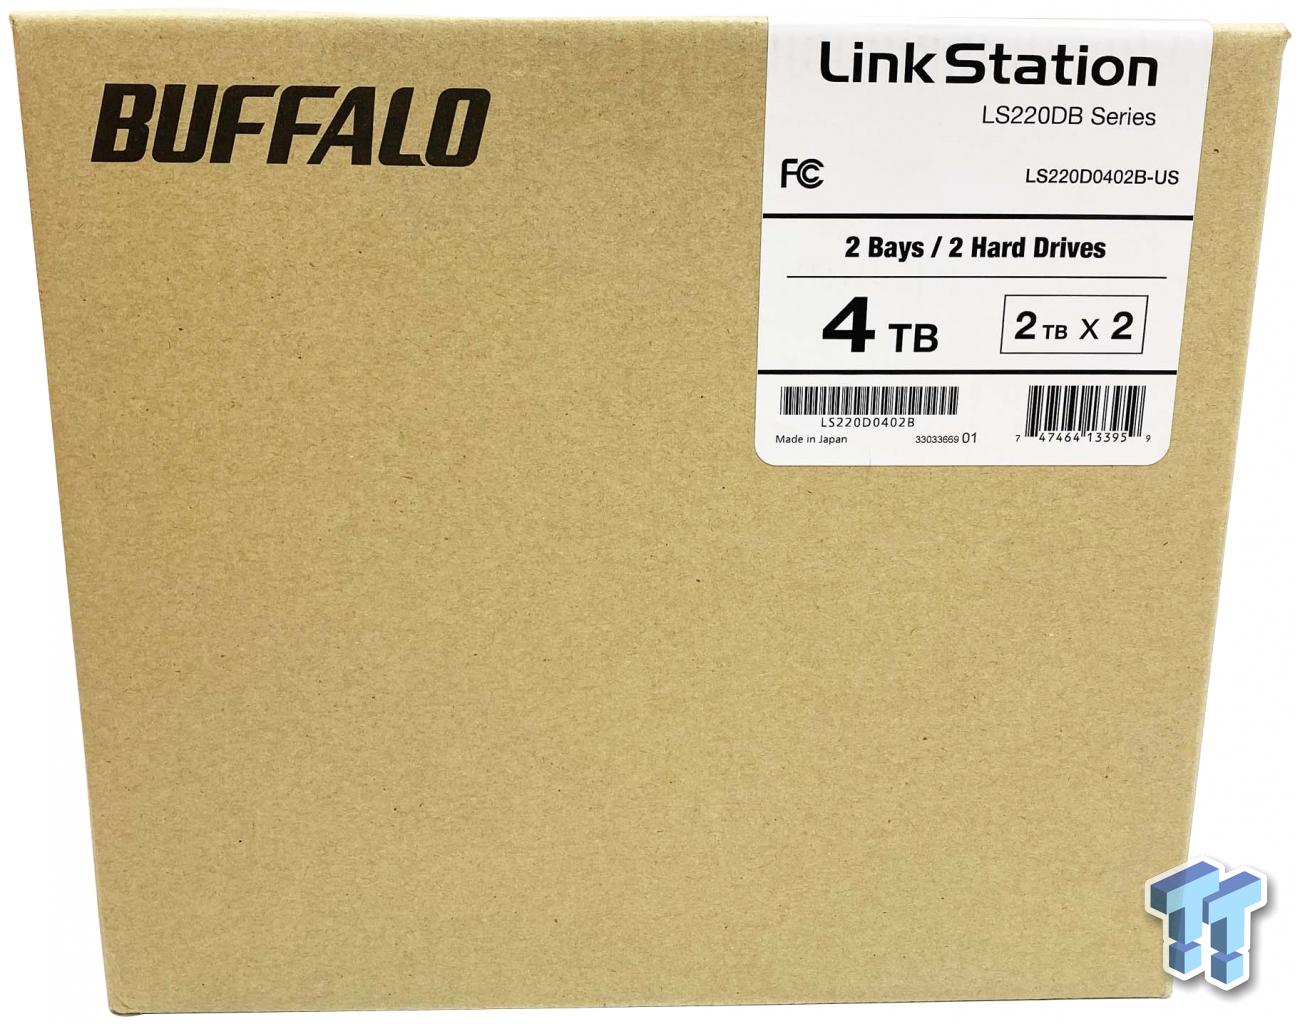 Buffalo LinkStation SOHO 4TB NAS Review